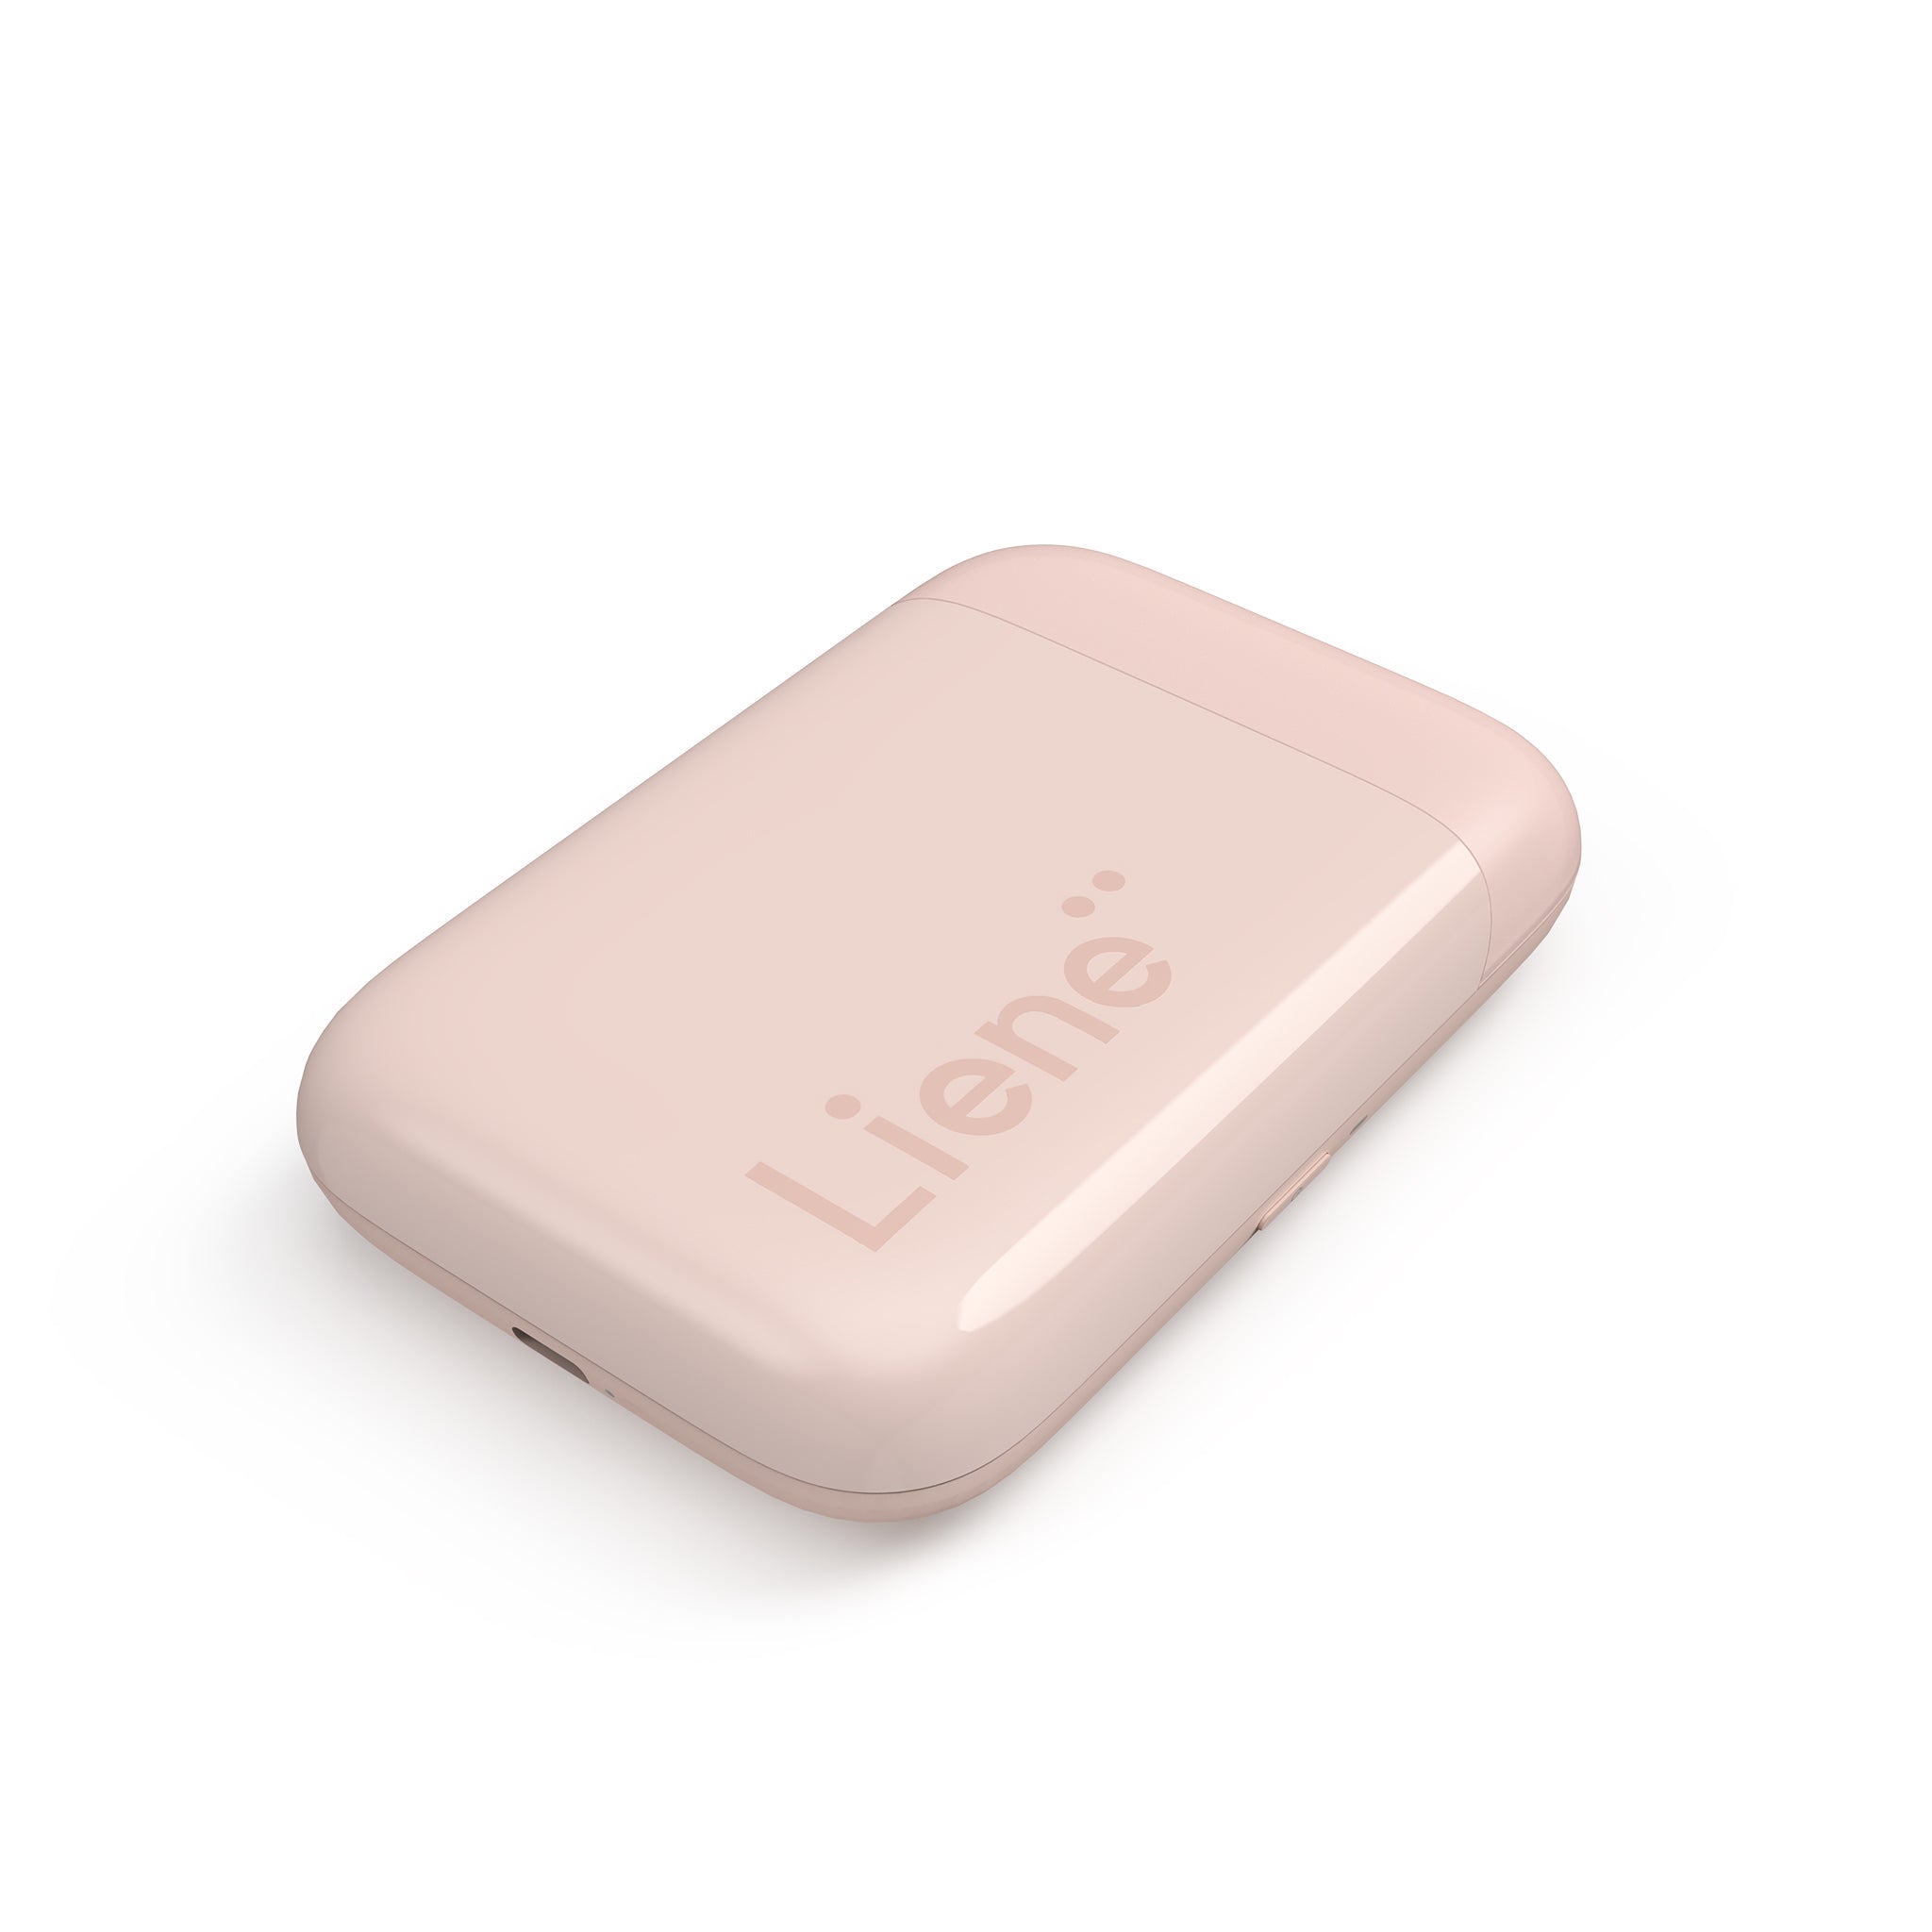 Liene Pearl K100 2x3" Portable Photo Printer - Pink (5 Zink Photo Paper)